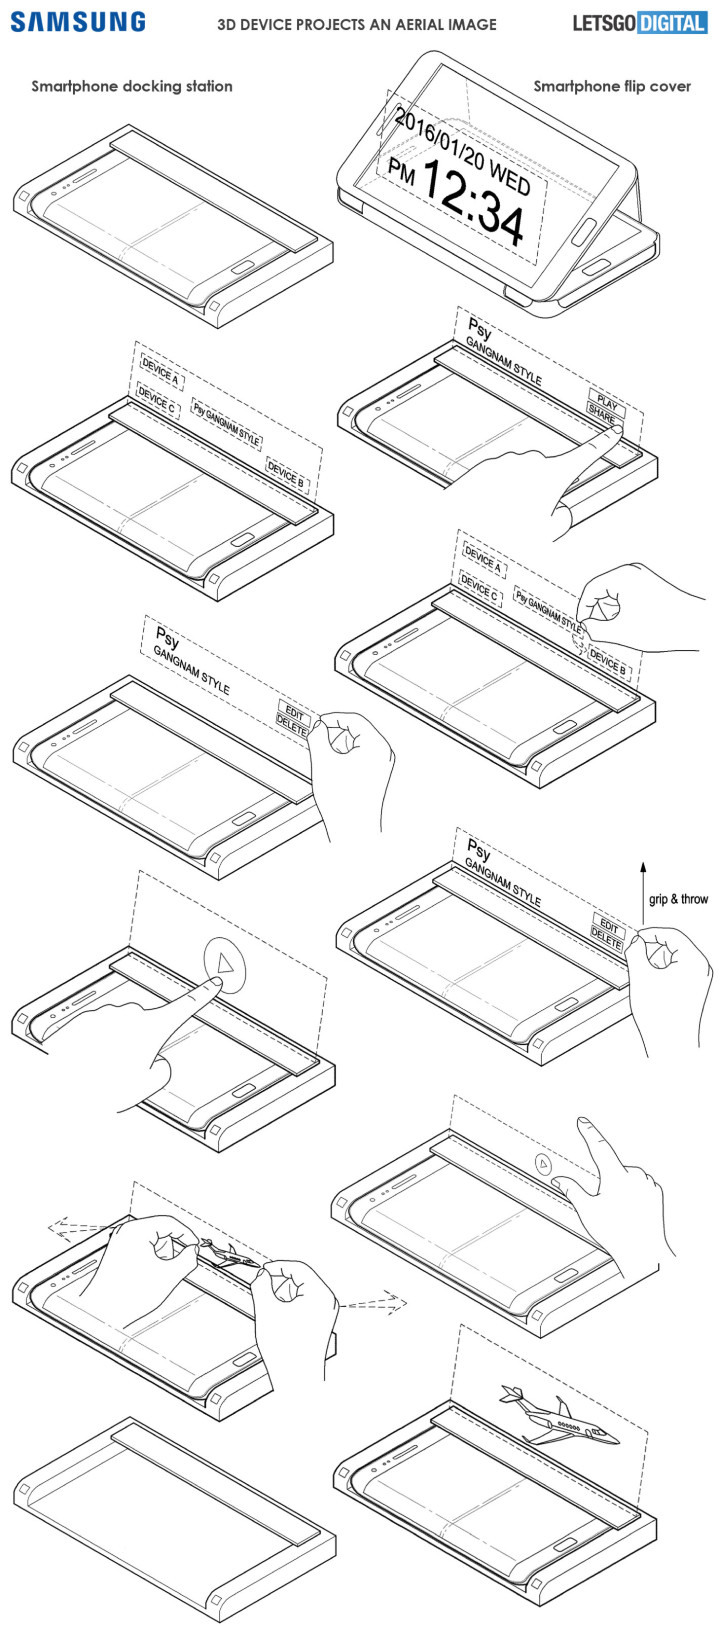 Samsung-Hologram-Dock-patent-drawings-1420x3215.jpg